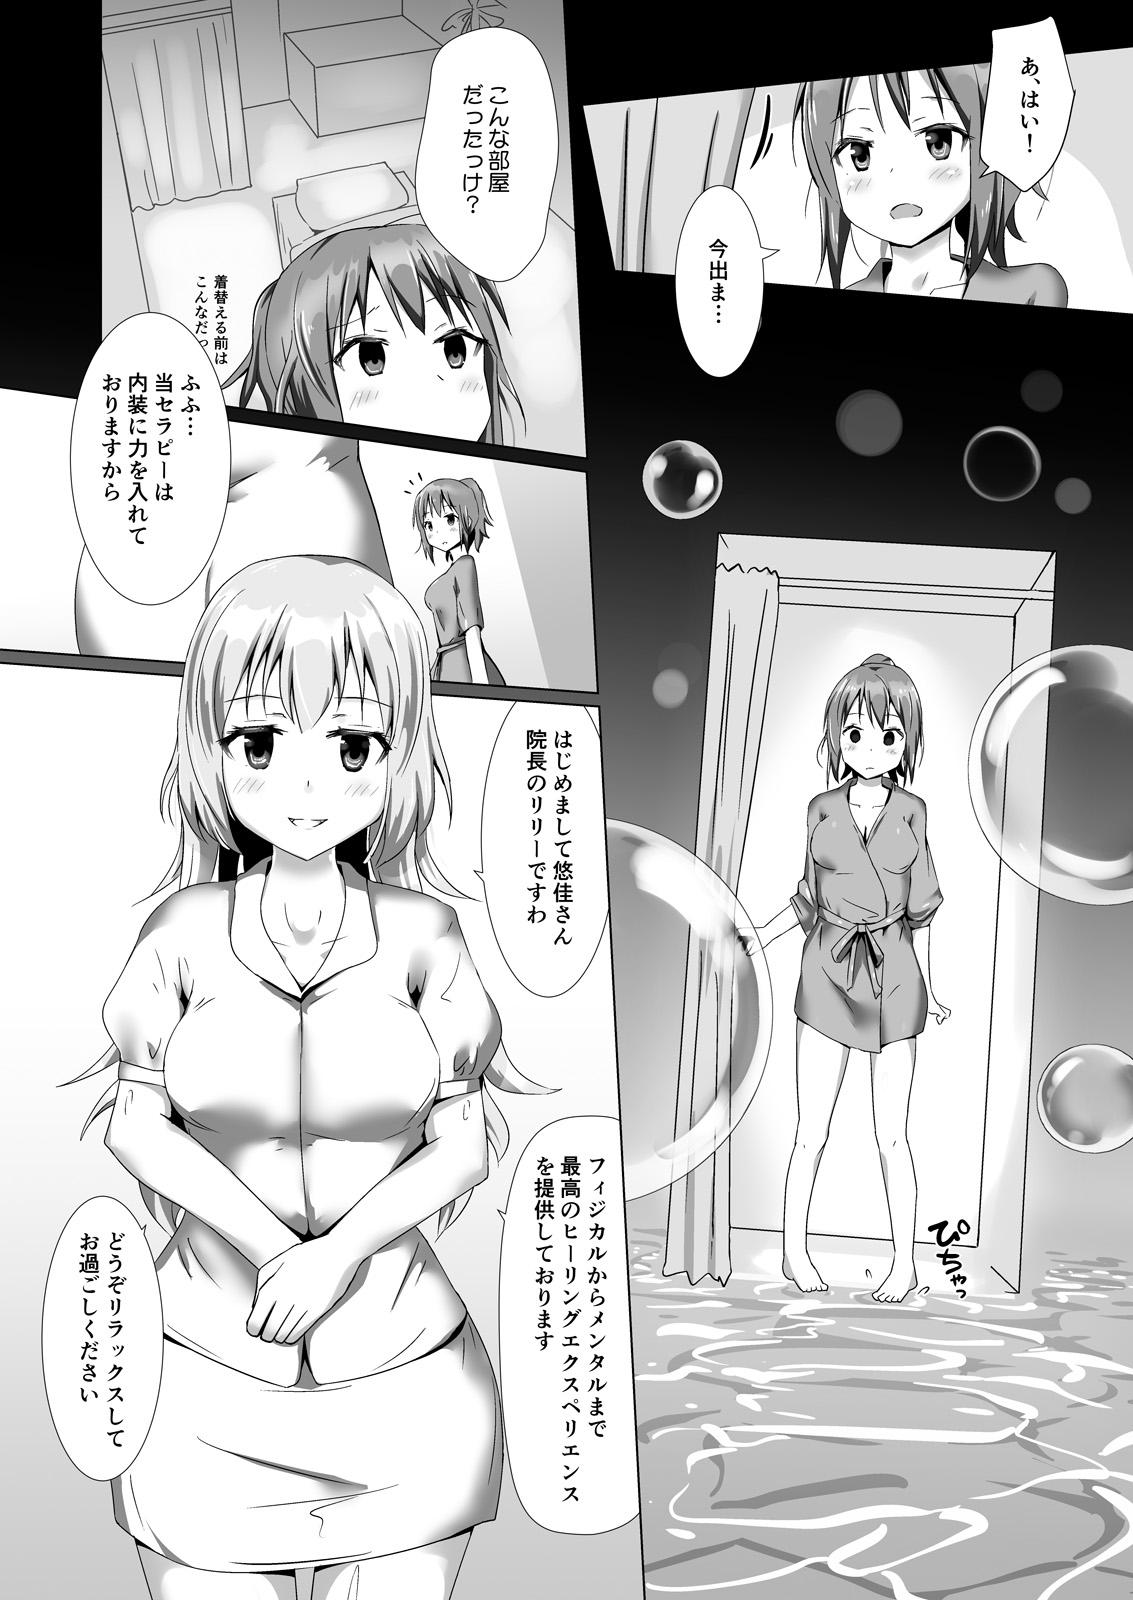 Teamskeet Yumewatari no Mistress Client Side - Original Gets - Page 5